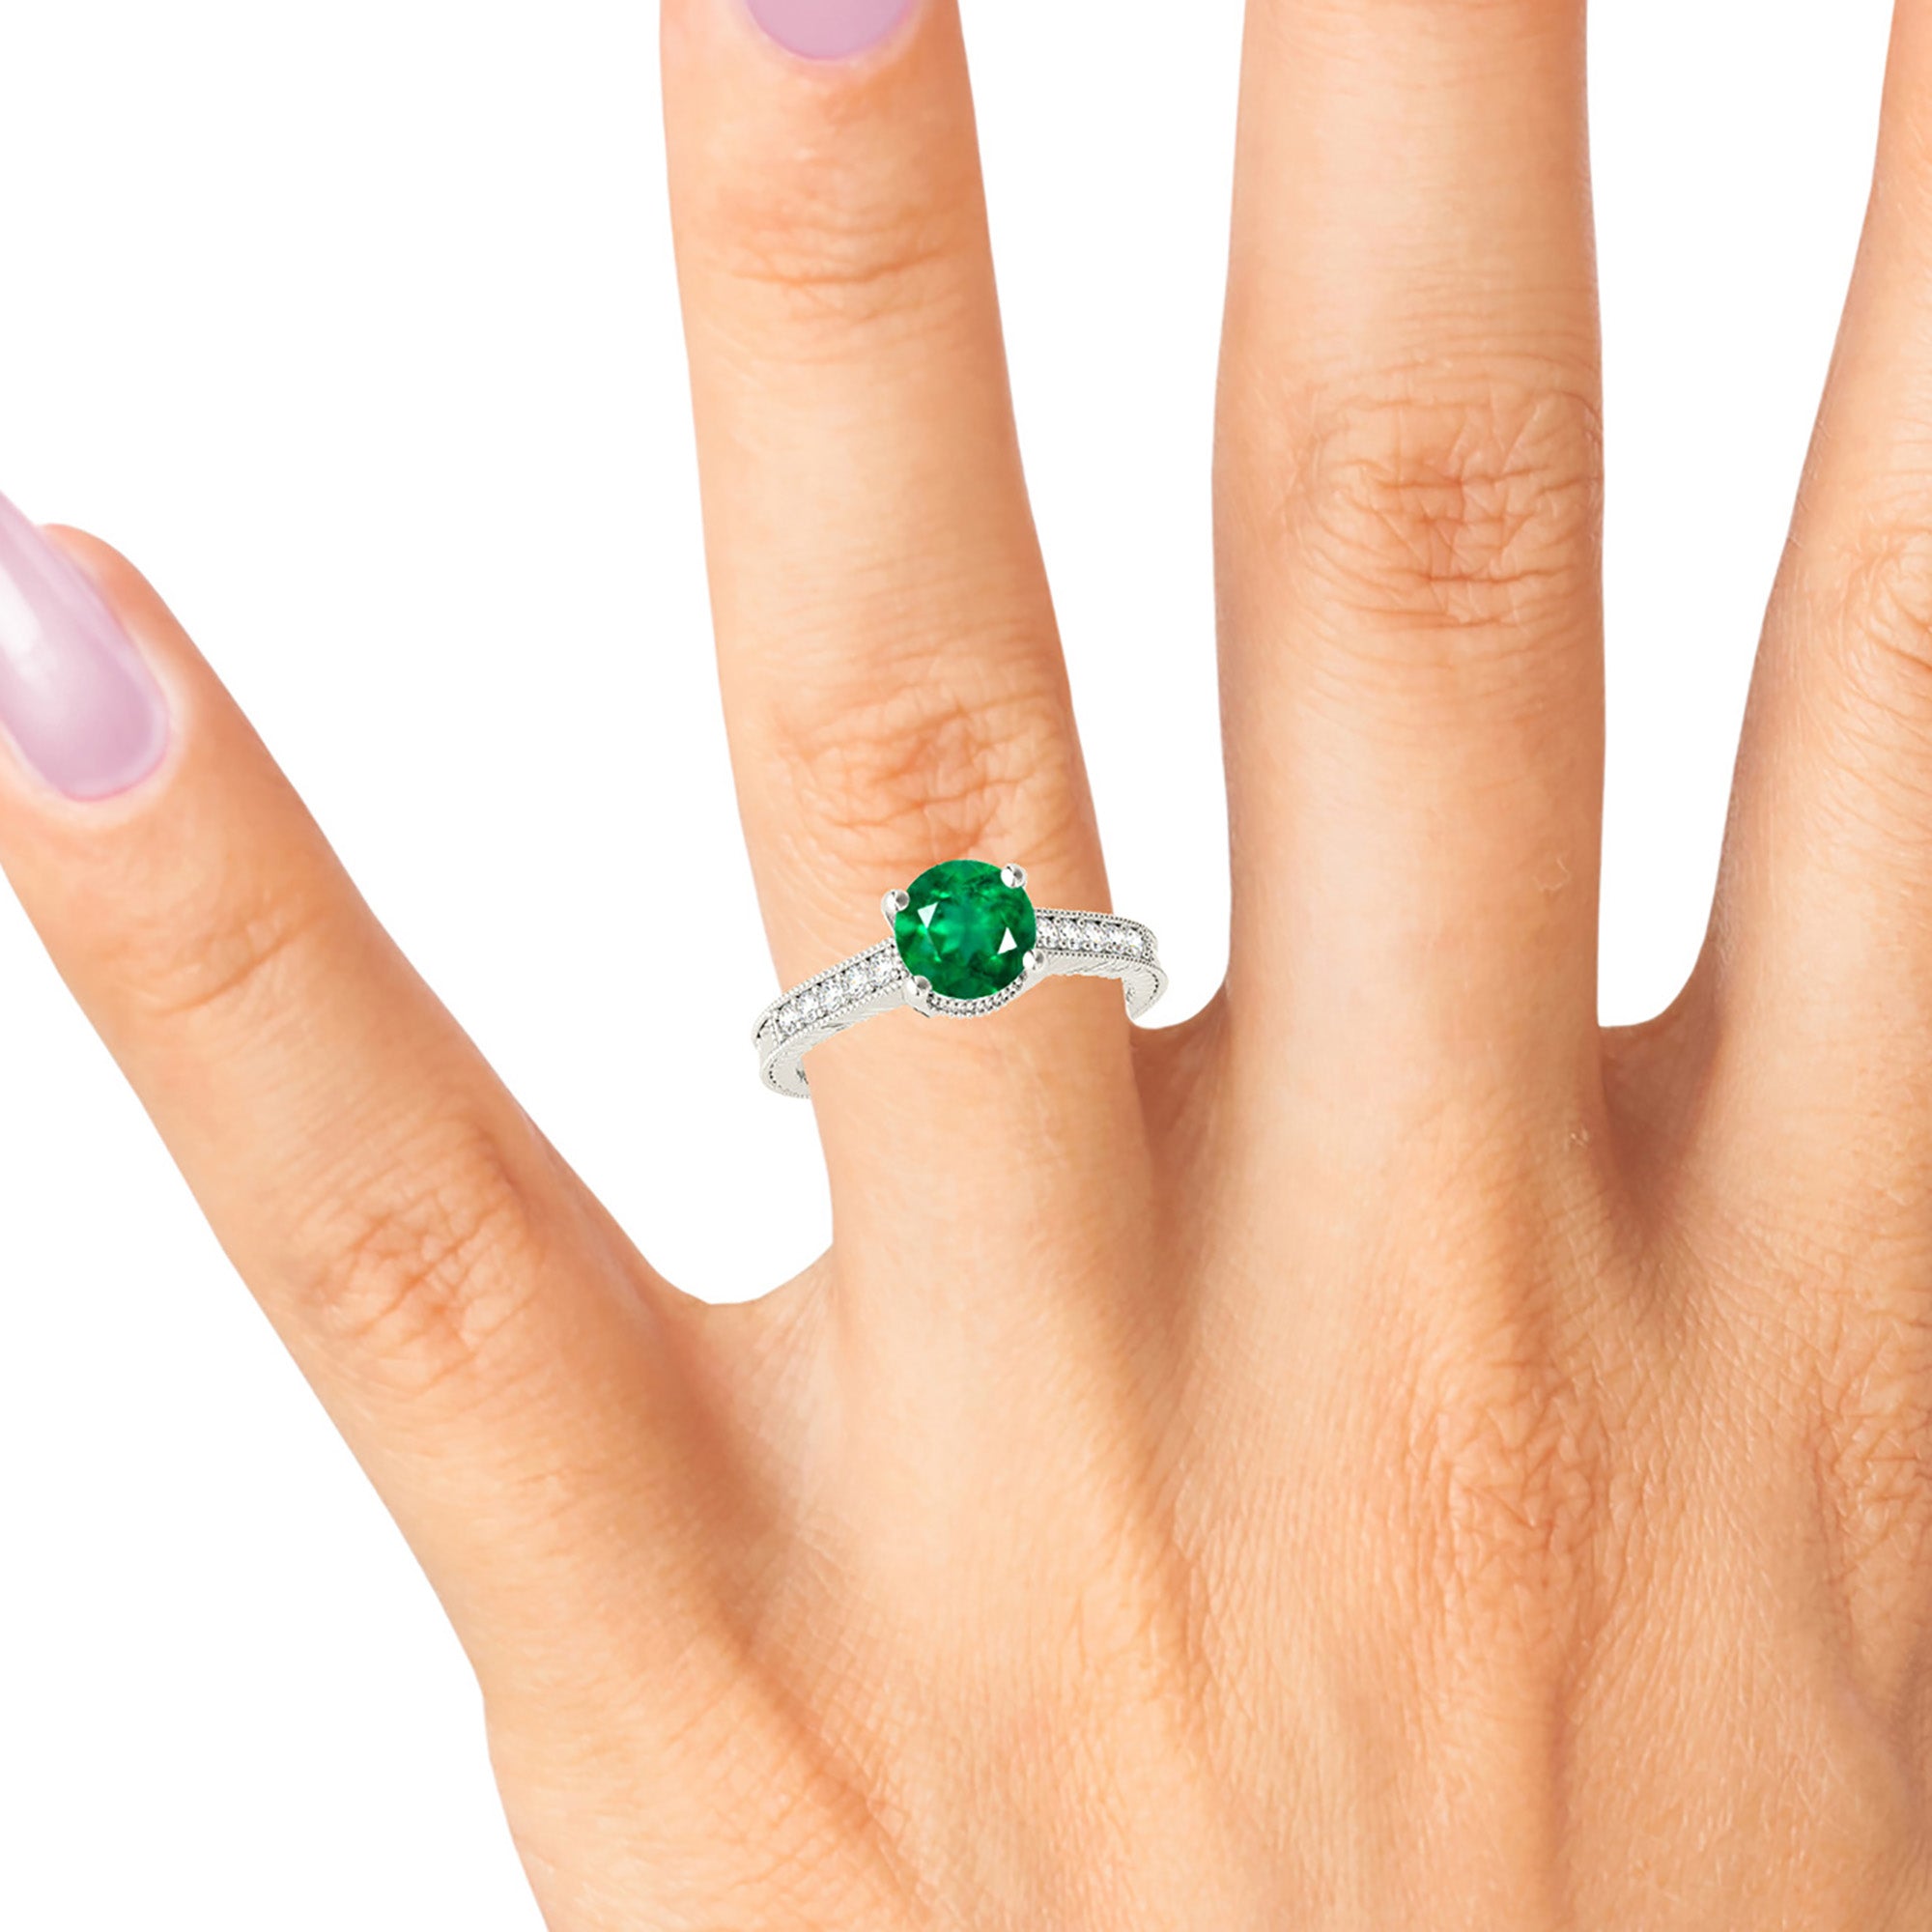 1.75 ct. Genuine Emerald Ring With 0.20 ctw. Diamond Filigree Design Band-in 14K/18K White, Yellow, Rose Gold and Platinum - Christmas Jewelry Gift -VIRABYANI